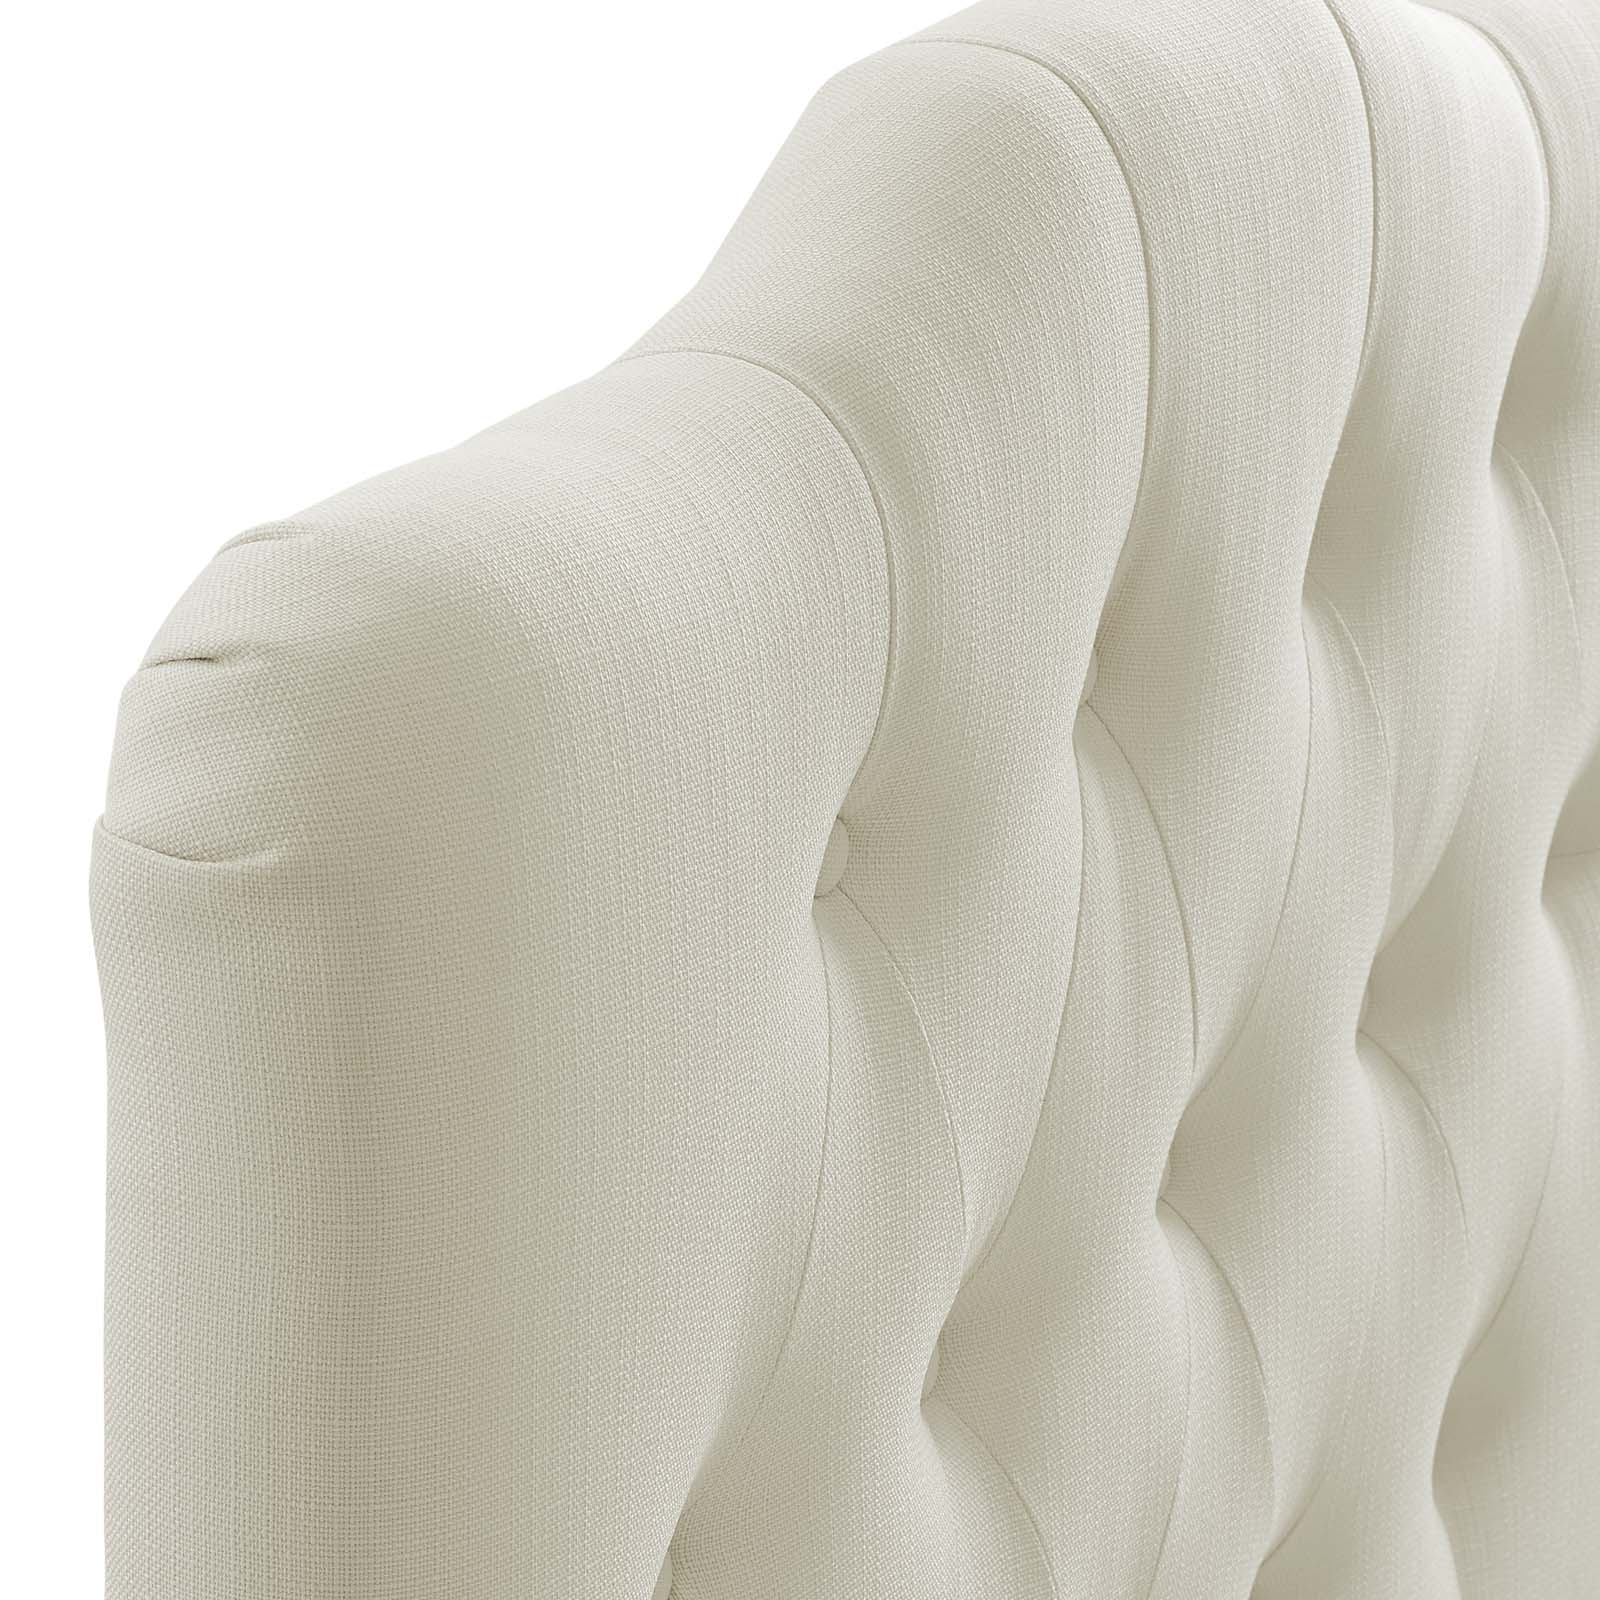 Annabel Twin Upholstered Fabric Headboard